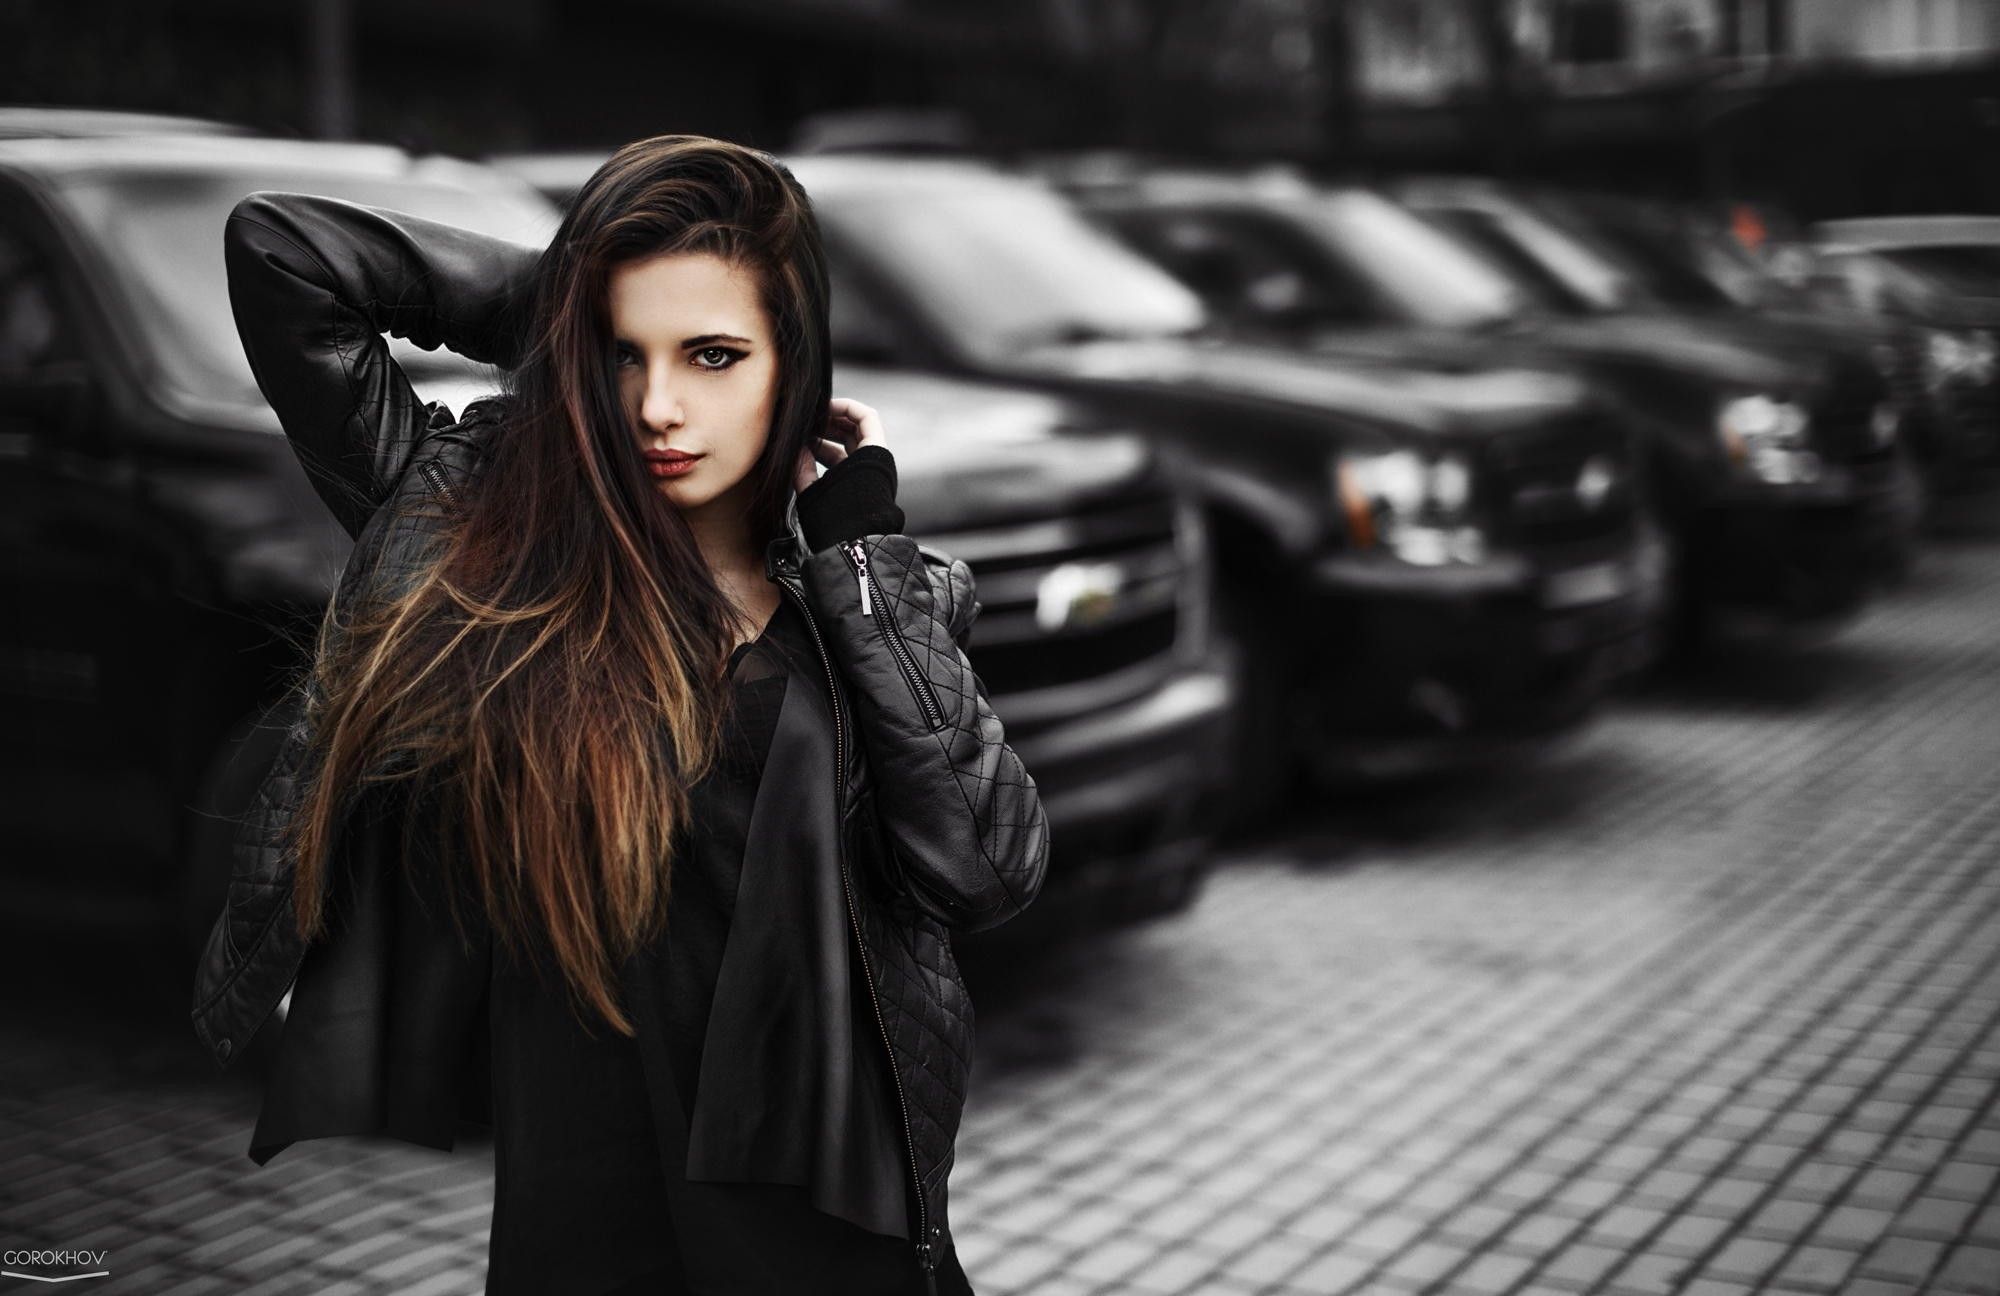 Girl with Mafia Cars. Beauty model, Long hair styles, Car girls